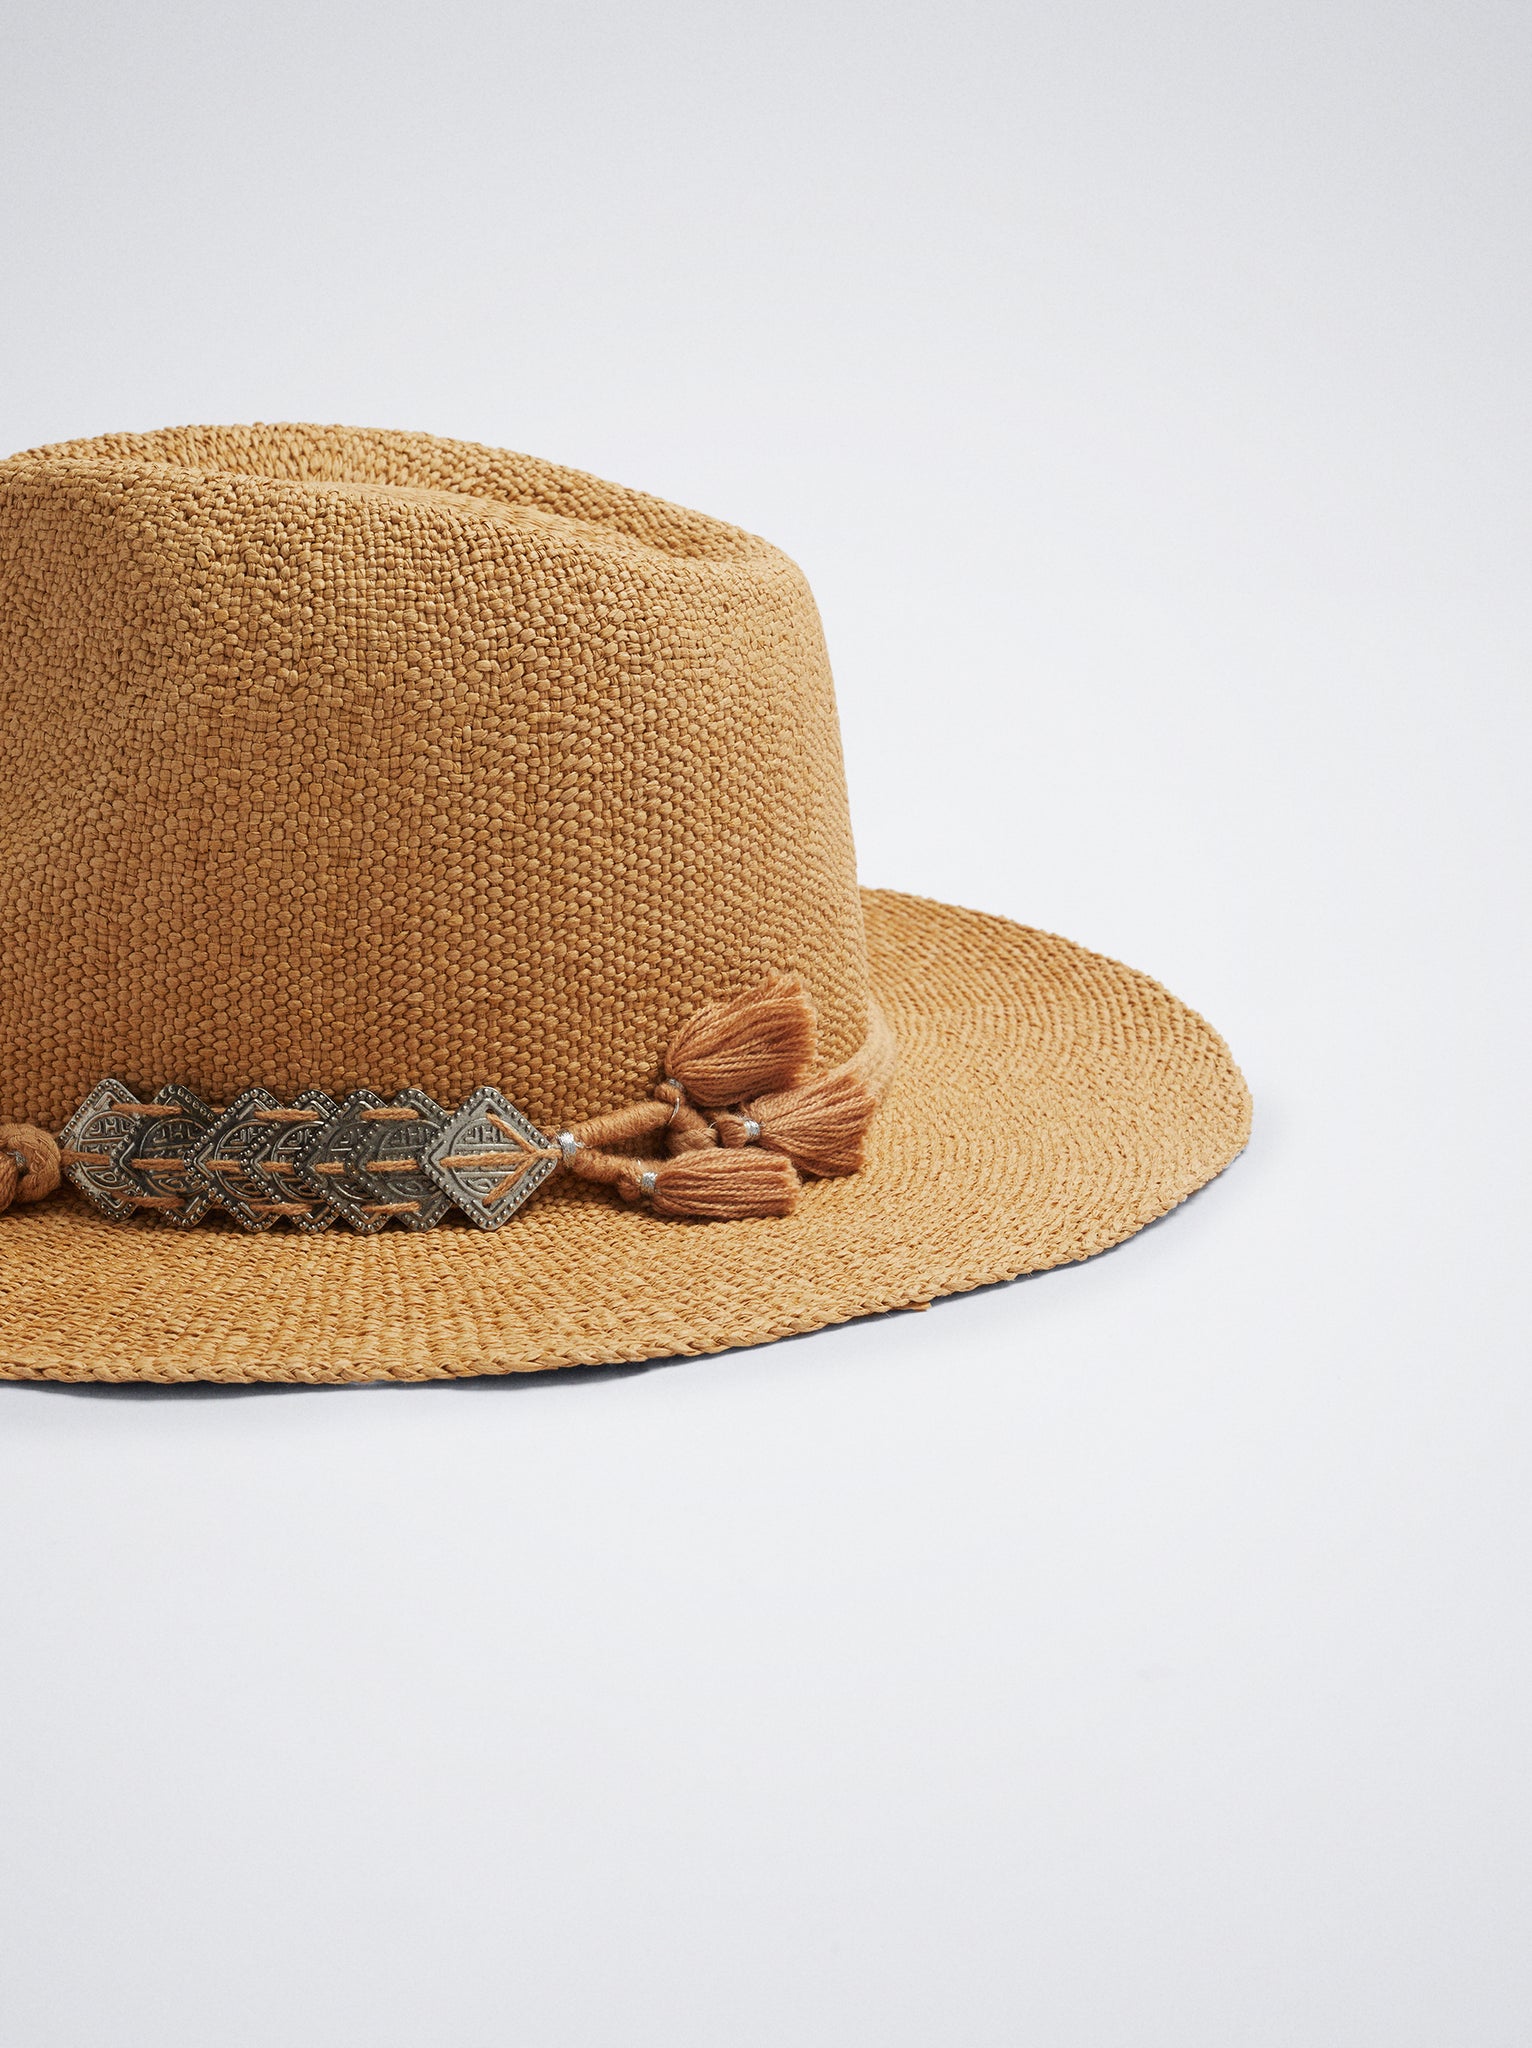 Doublecheese Fedora Hat